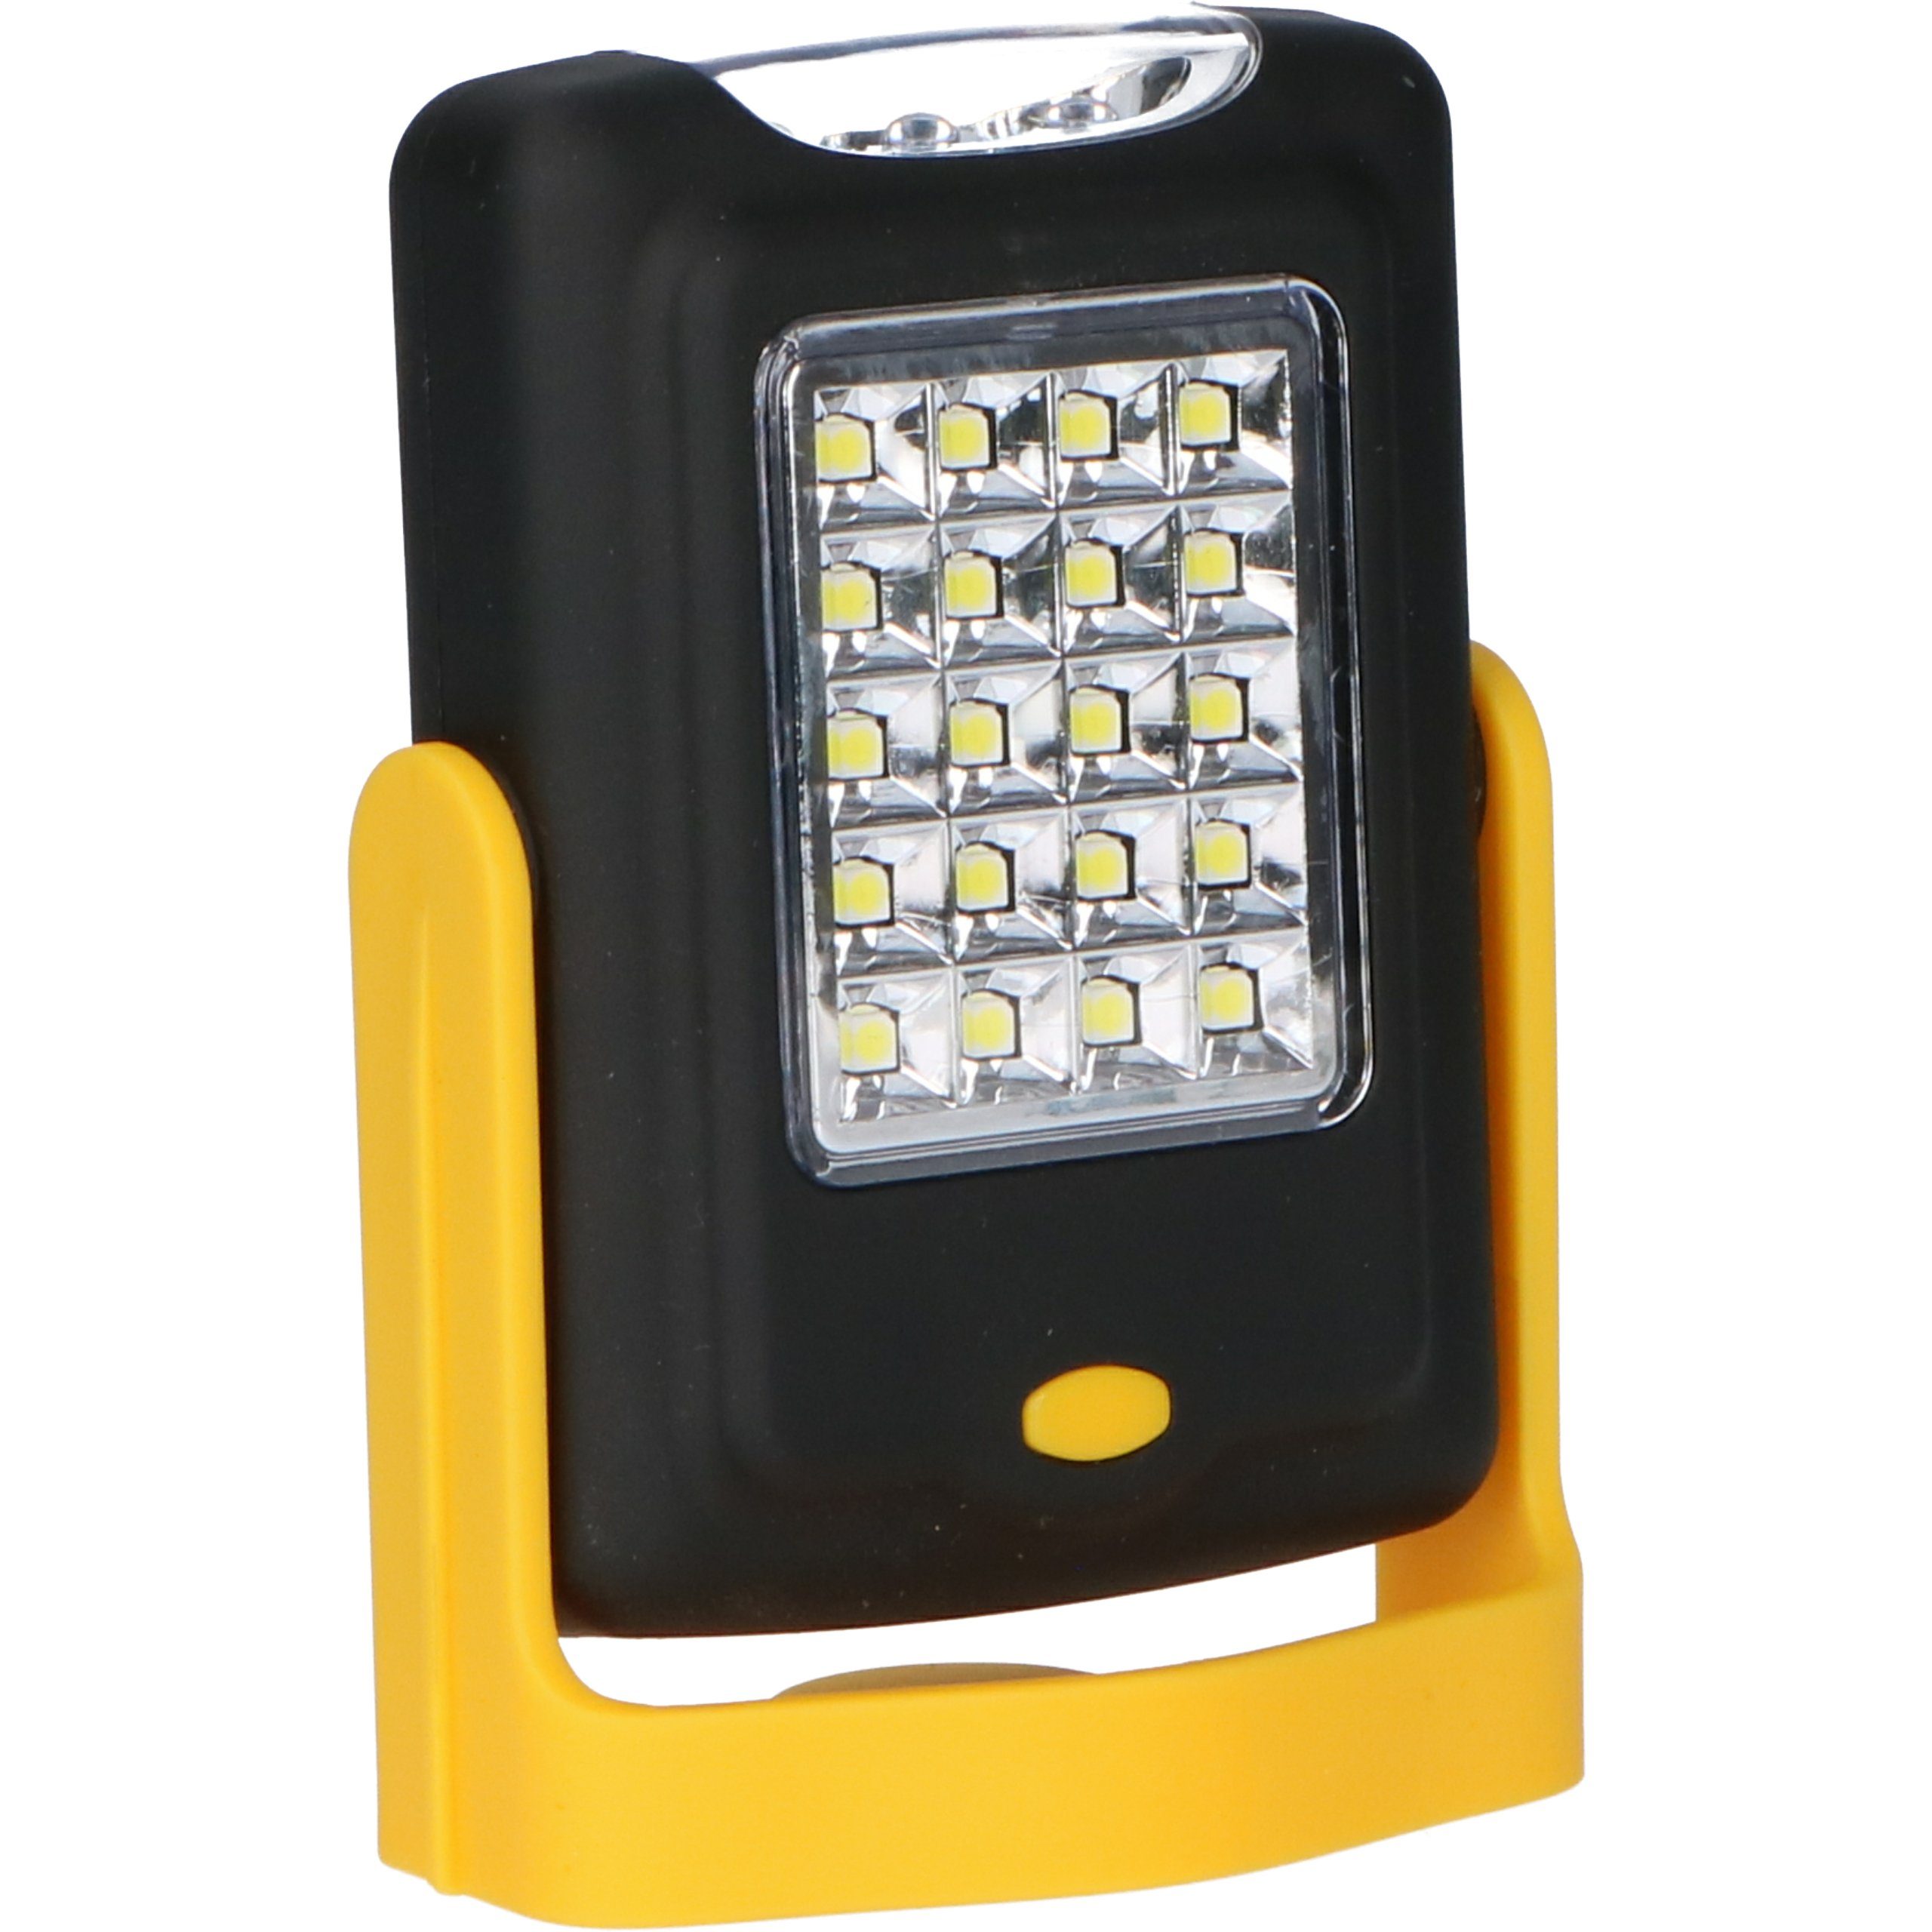 LED's work LED Arbeitsleuchte 0700316 LED-Kompaktleuchte, LED, 1,4W kaltweiß